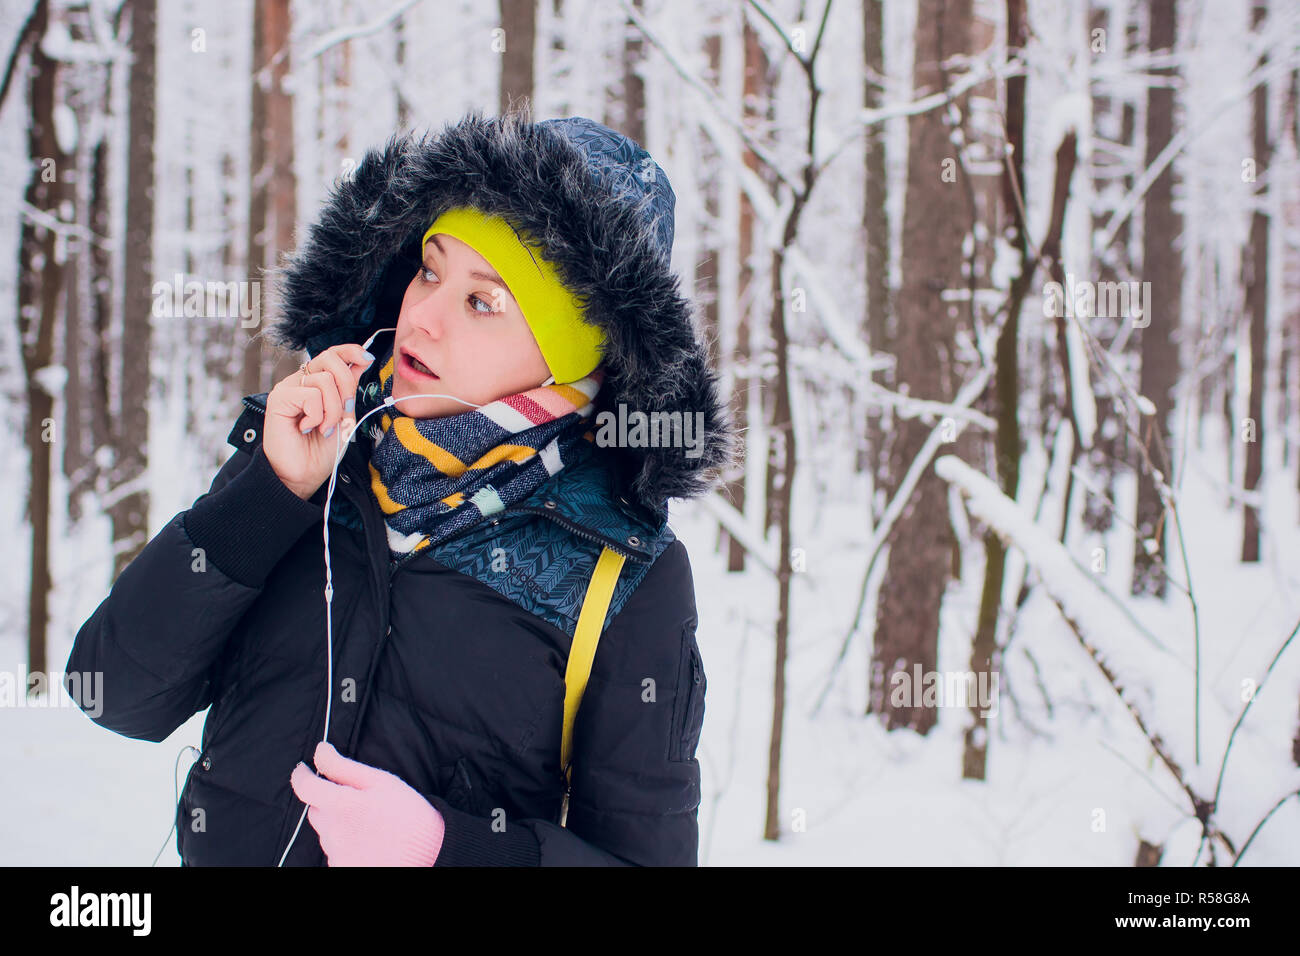 Picture showing happy woman enjoying winter season outdoors. Stock Photo